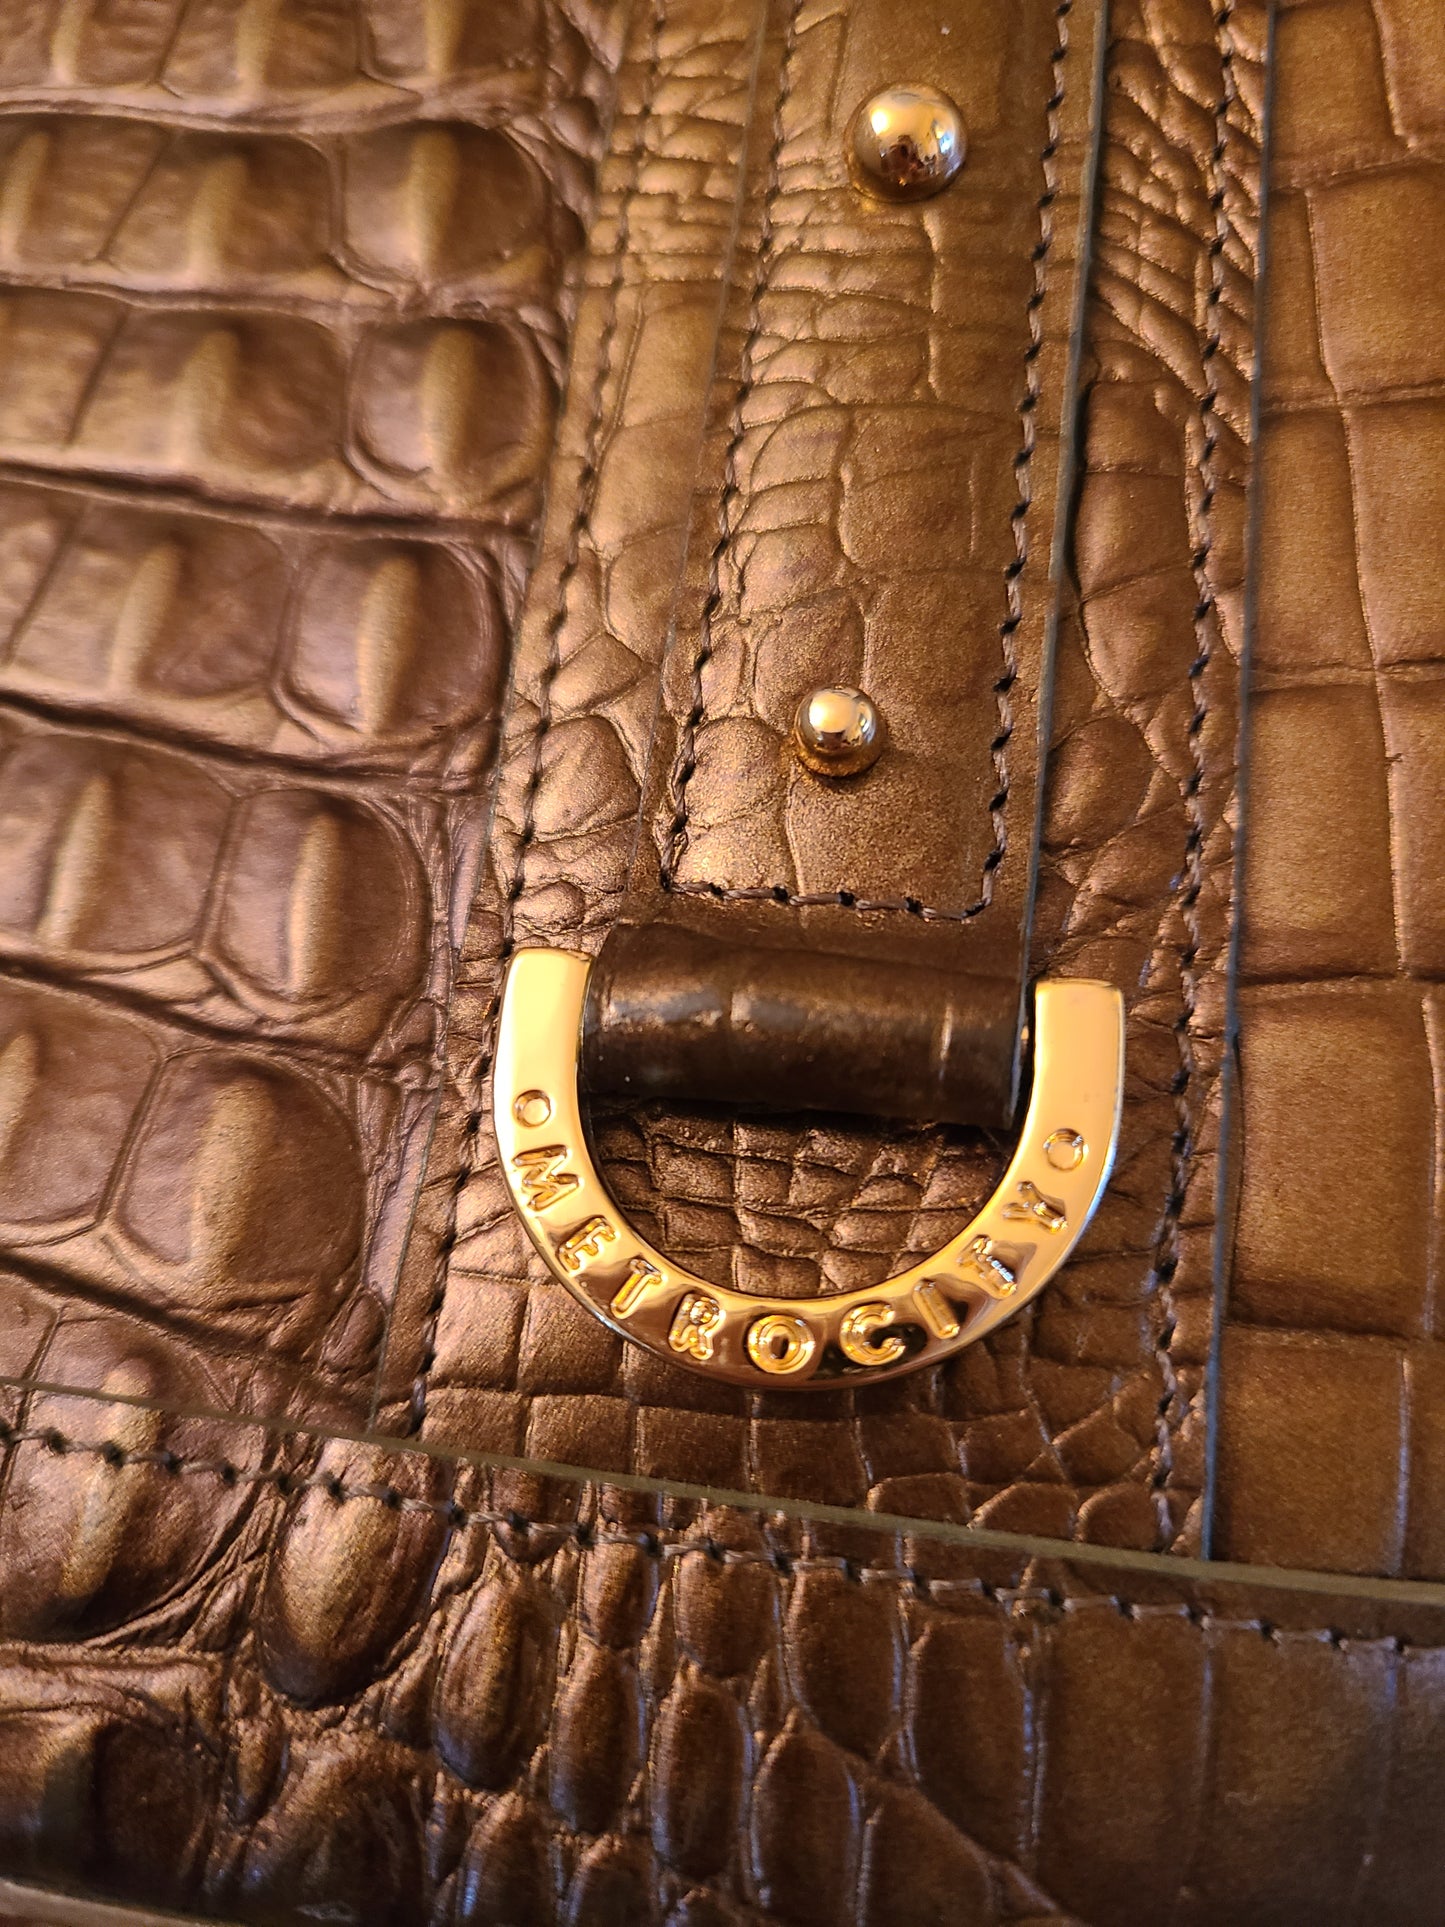 Metrocity Bronze Leather Handbag